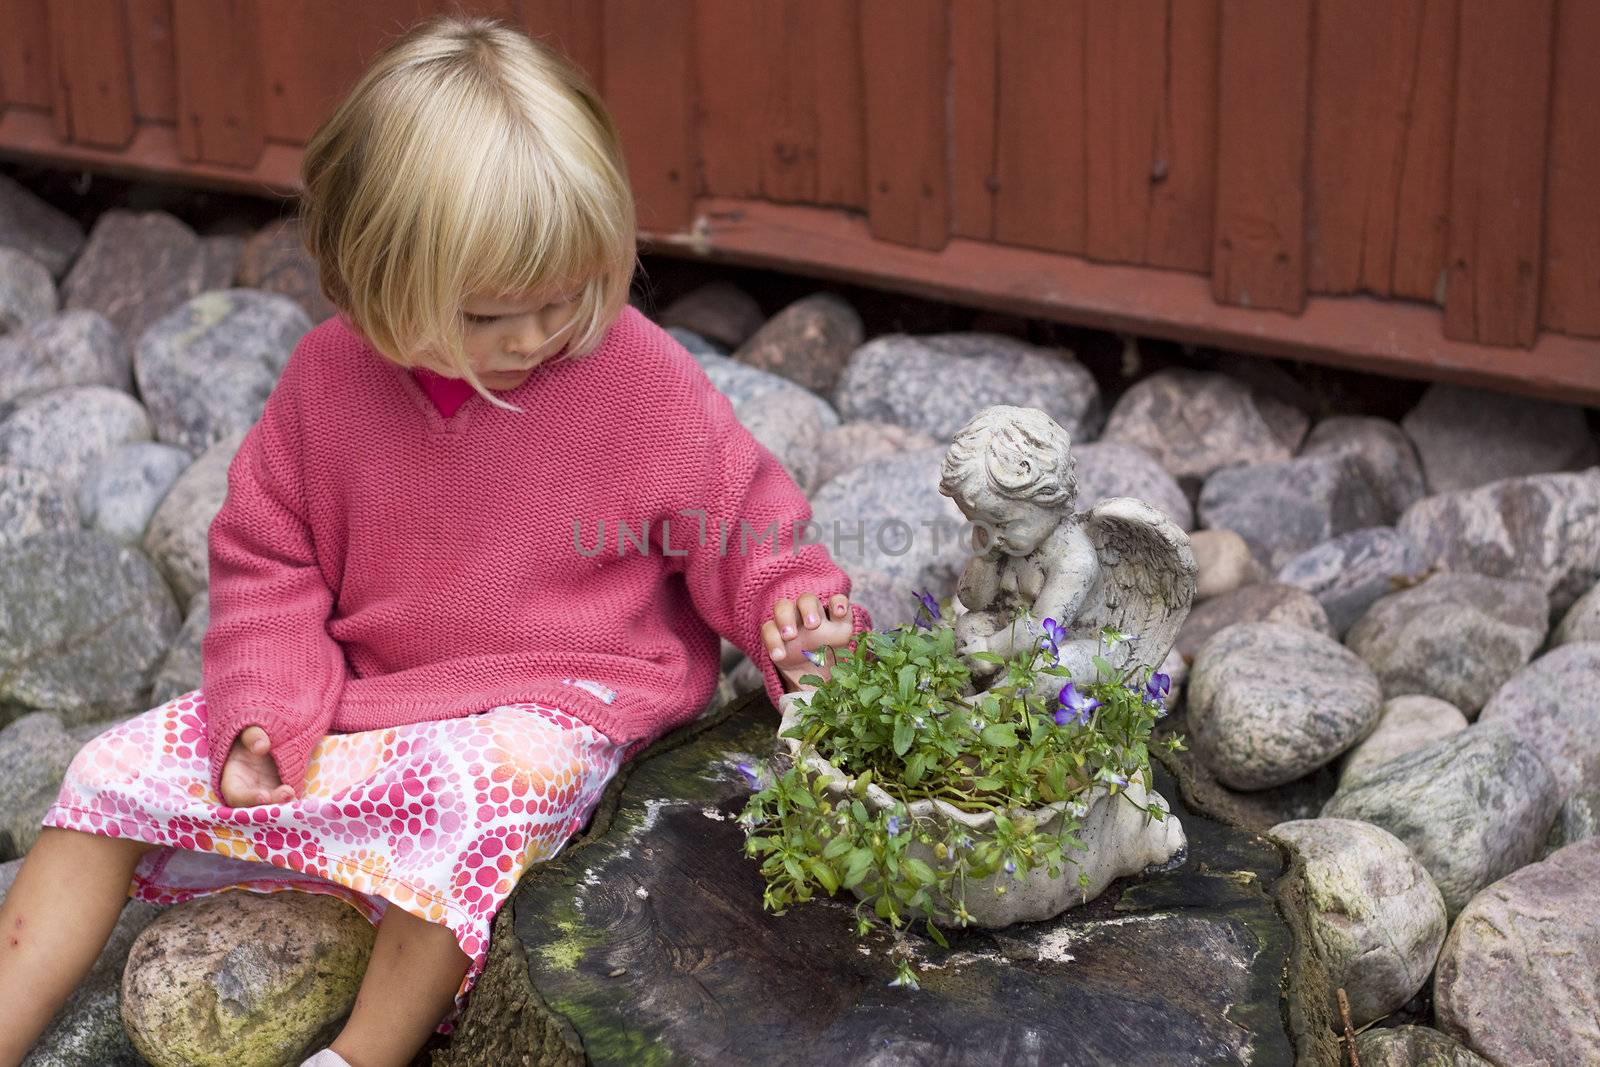 Girl sitting next to flower pot